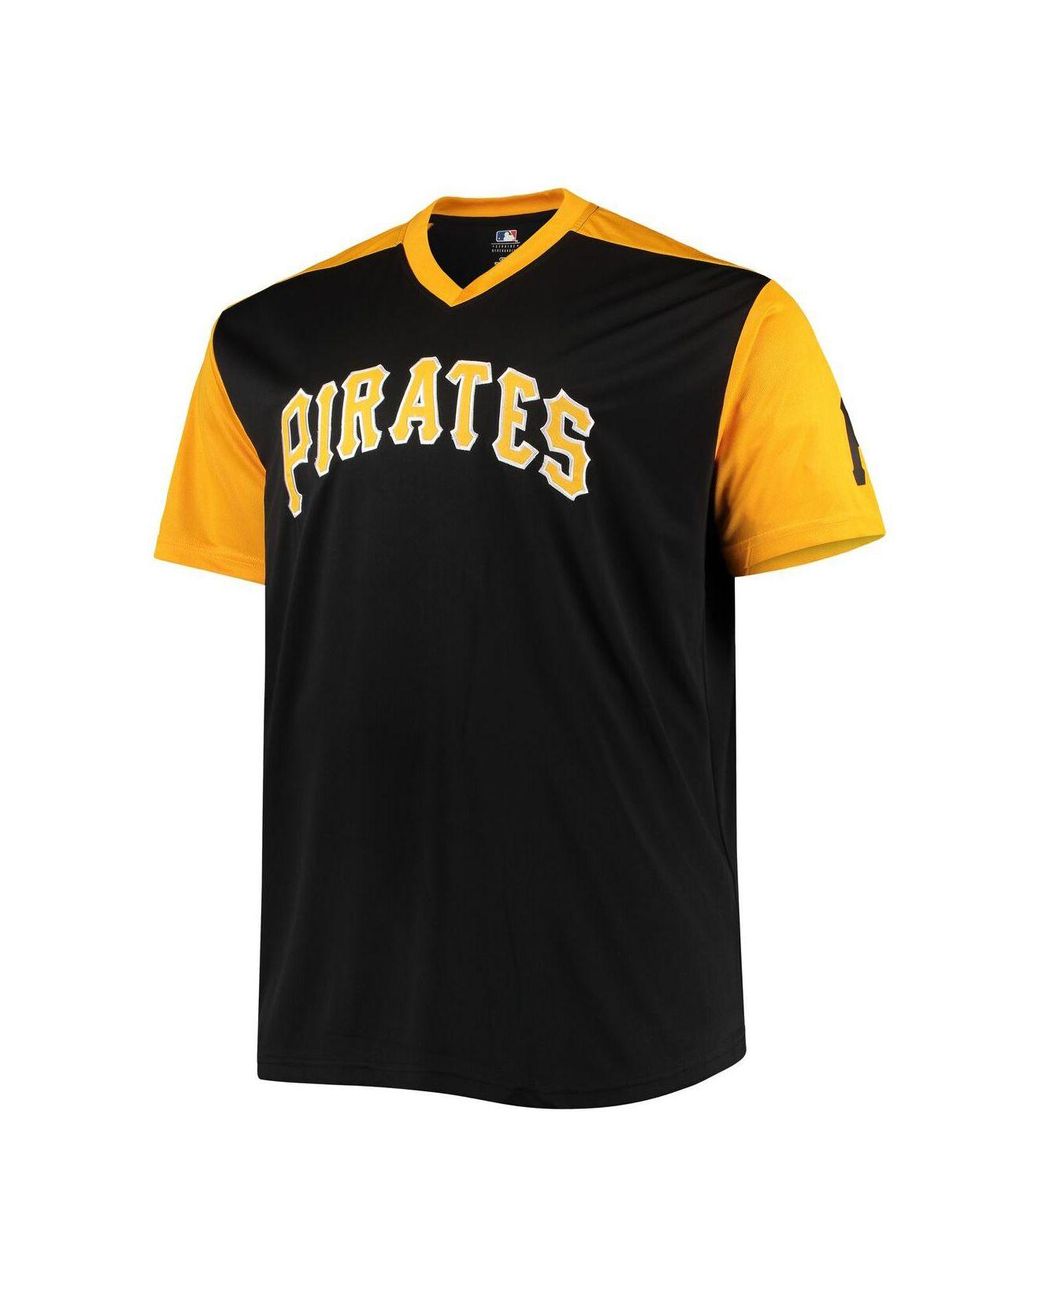 pittsburgh pirates black jersey